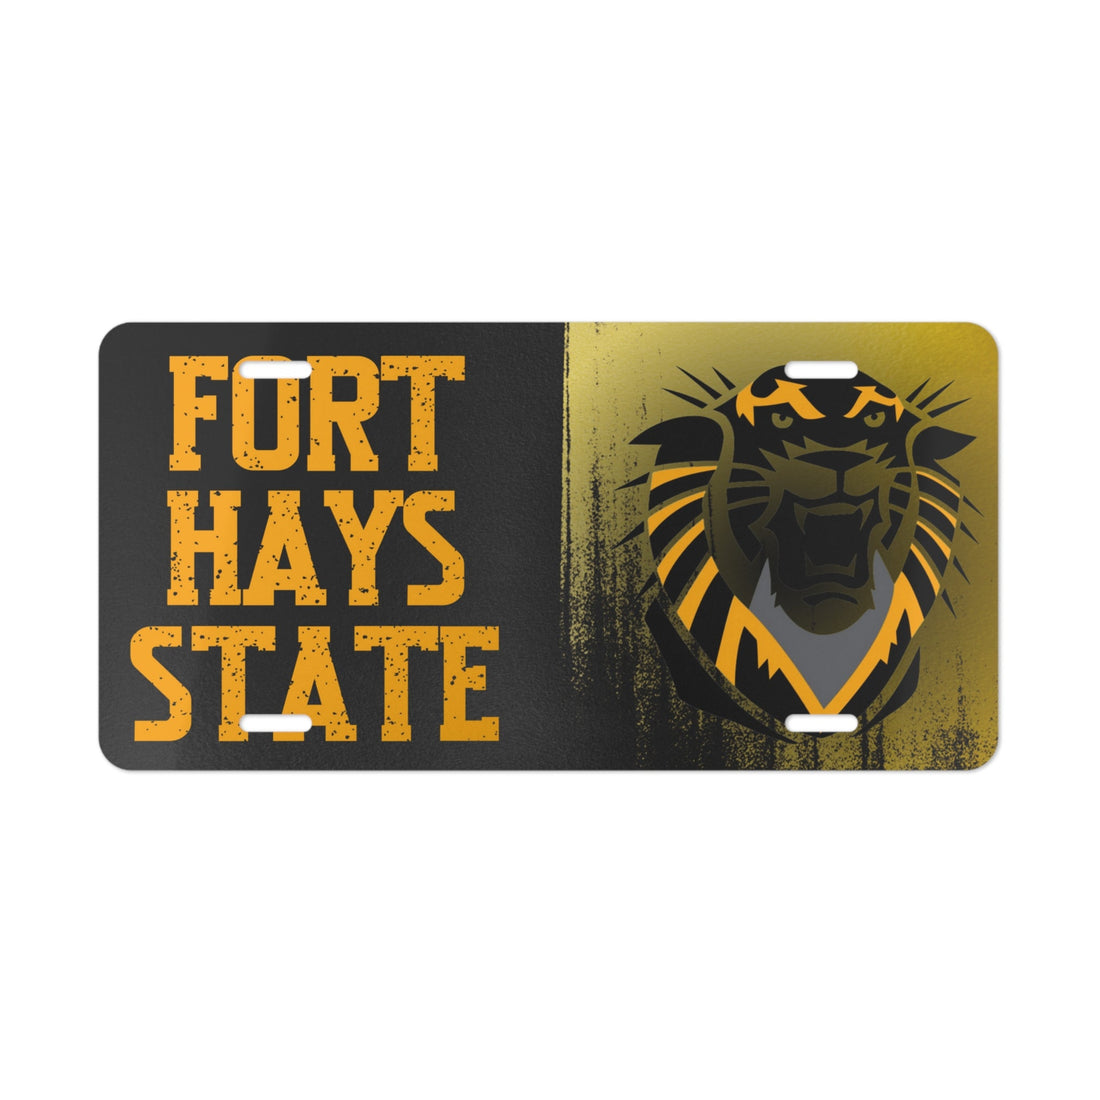 Fort Hays State Vanity Plate - Accessories - Positively Sassy - Fort Hays State Vanity Plate